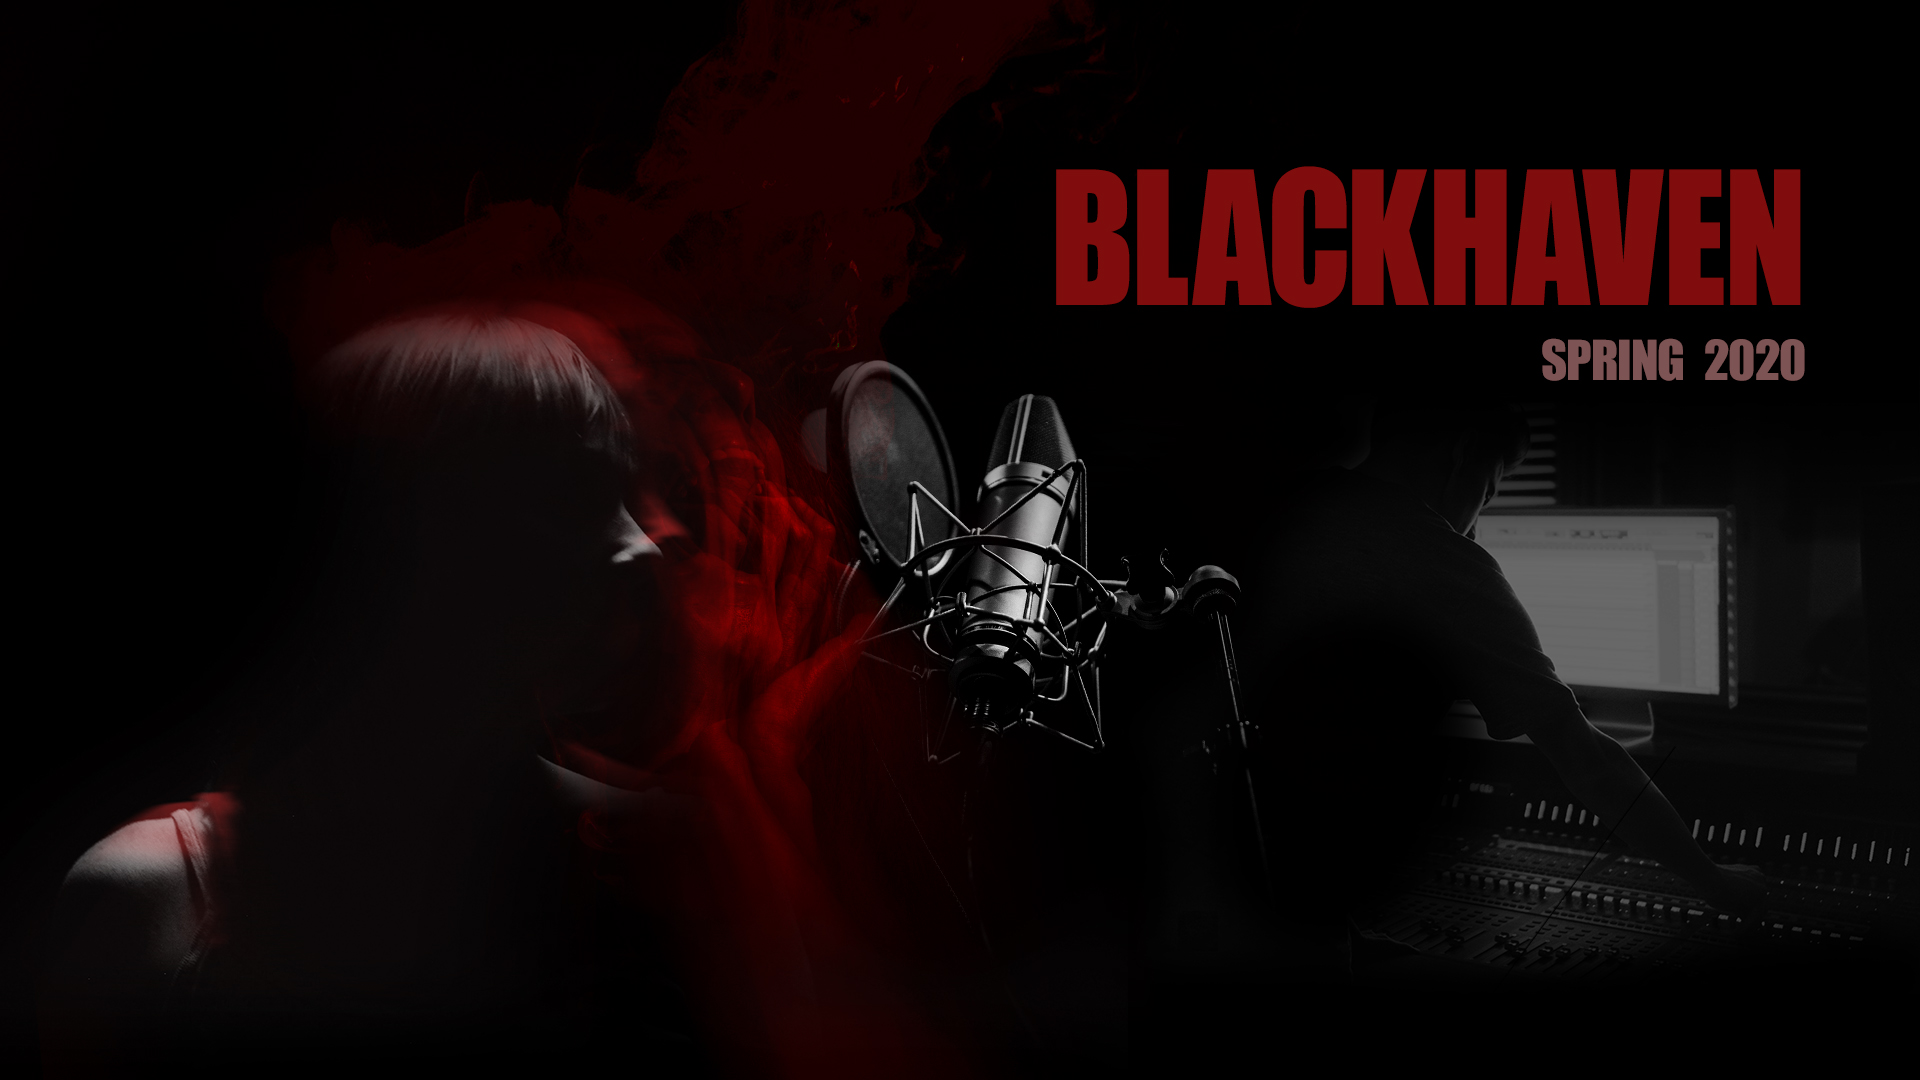 Blackhaven - Reboot in 2021 planned